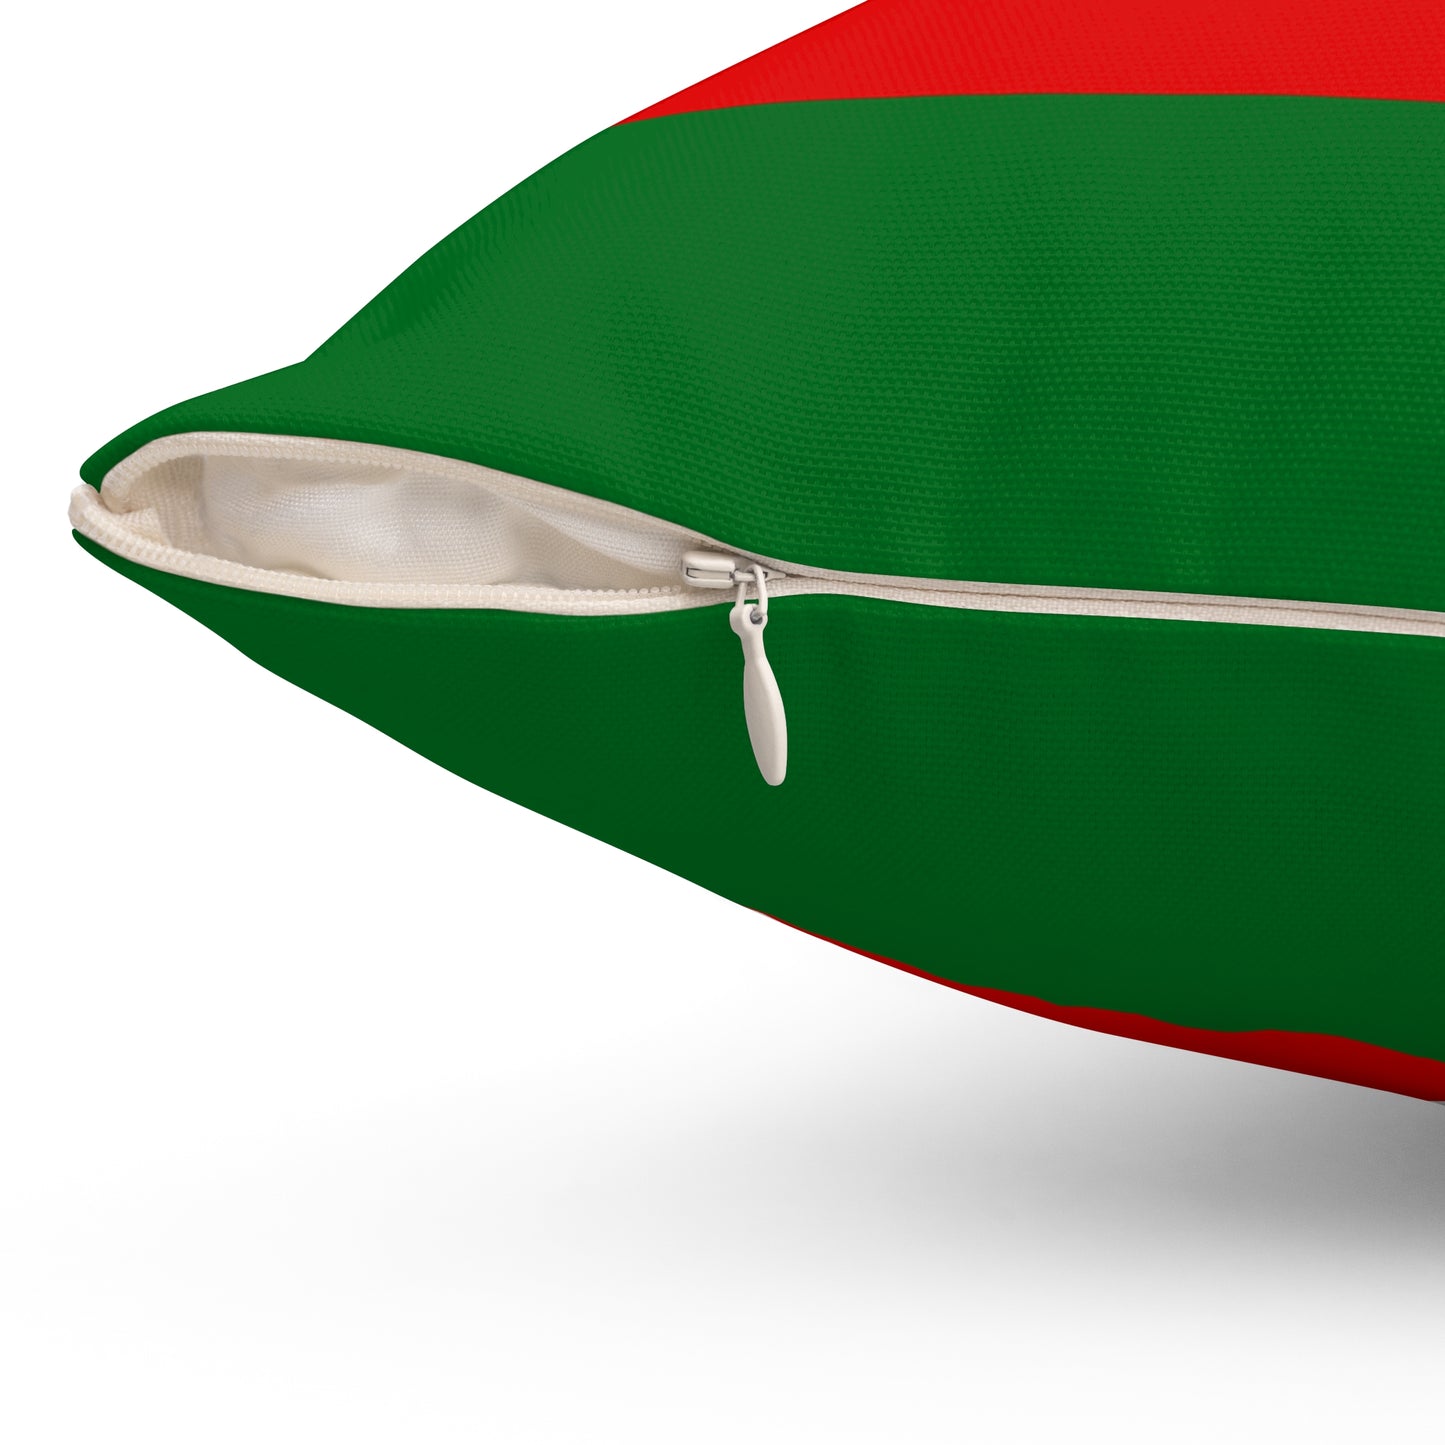 Spun Polyester Square Pillow - Somaliland Flag